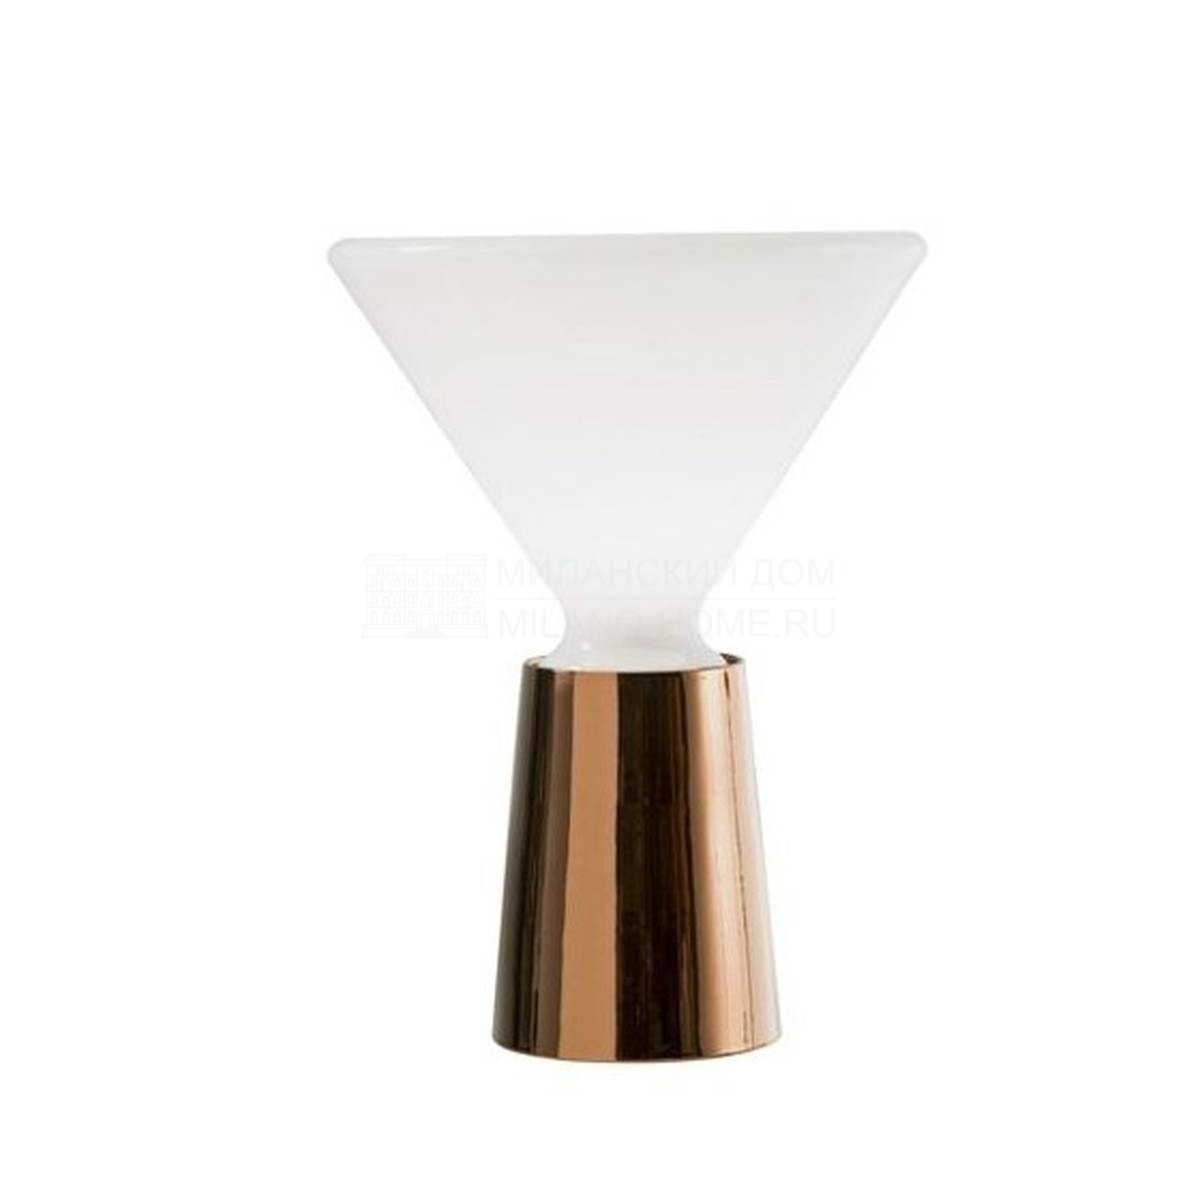 Настольная лампа Beam table lamp из Франции фабрики ROCHE BOBOIS